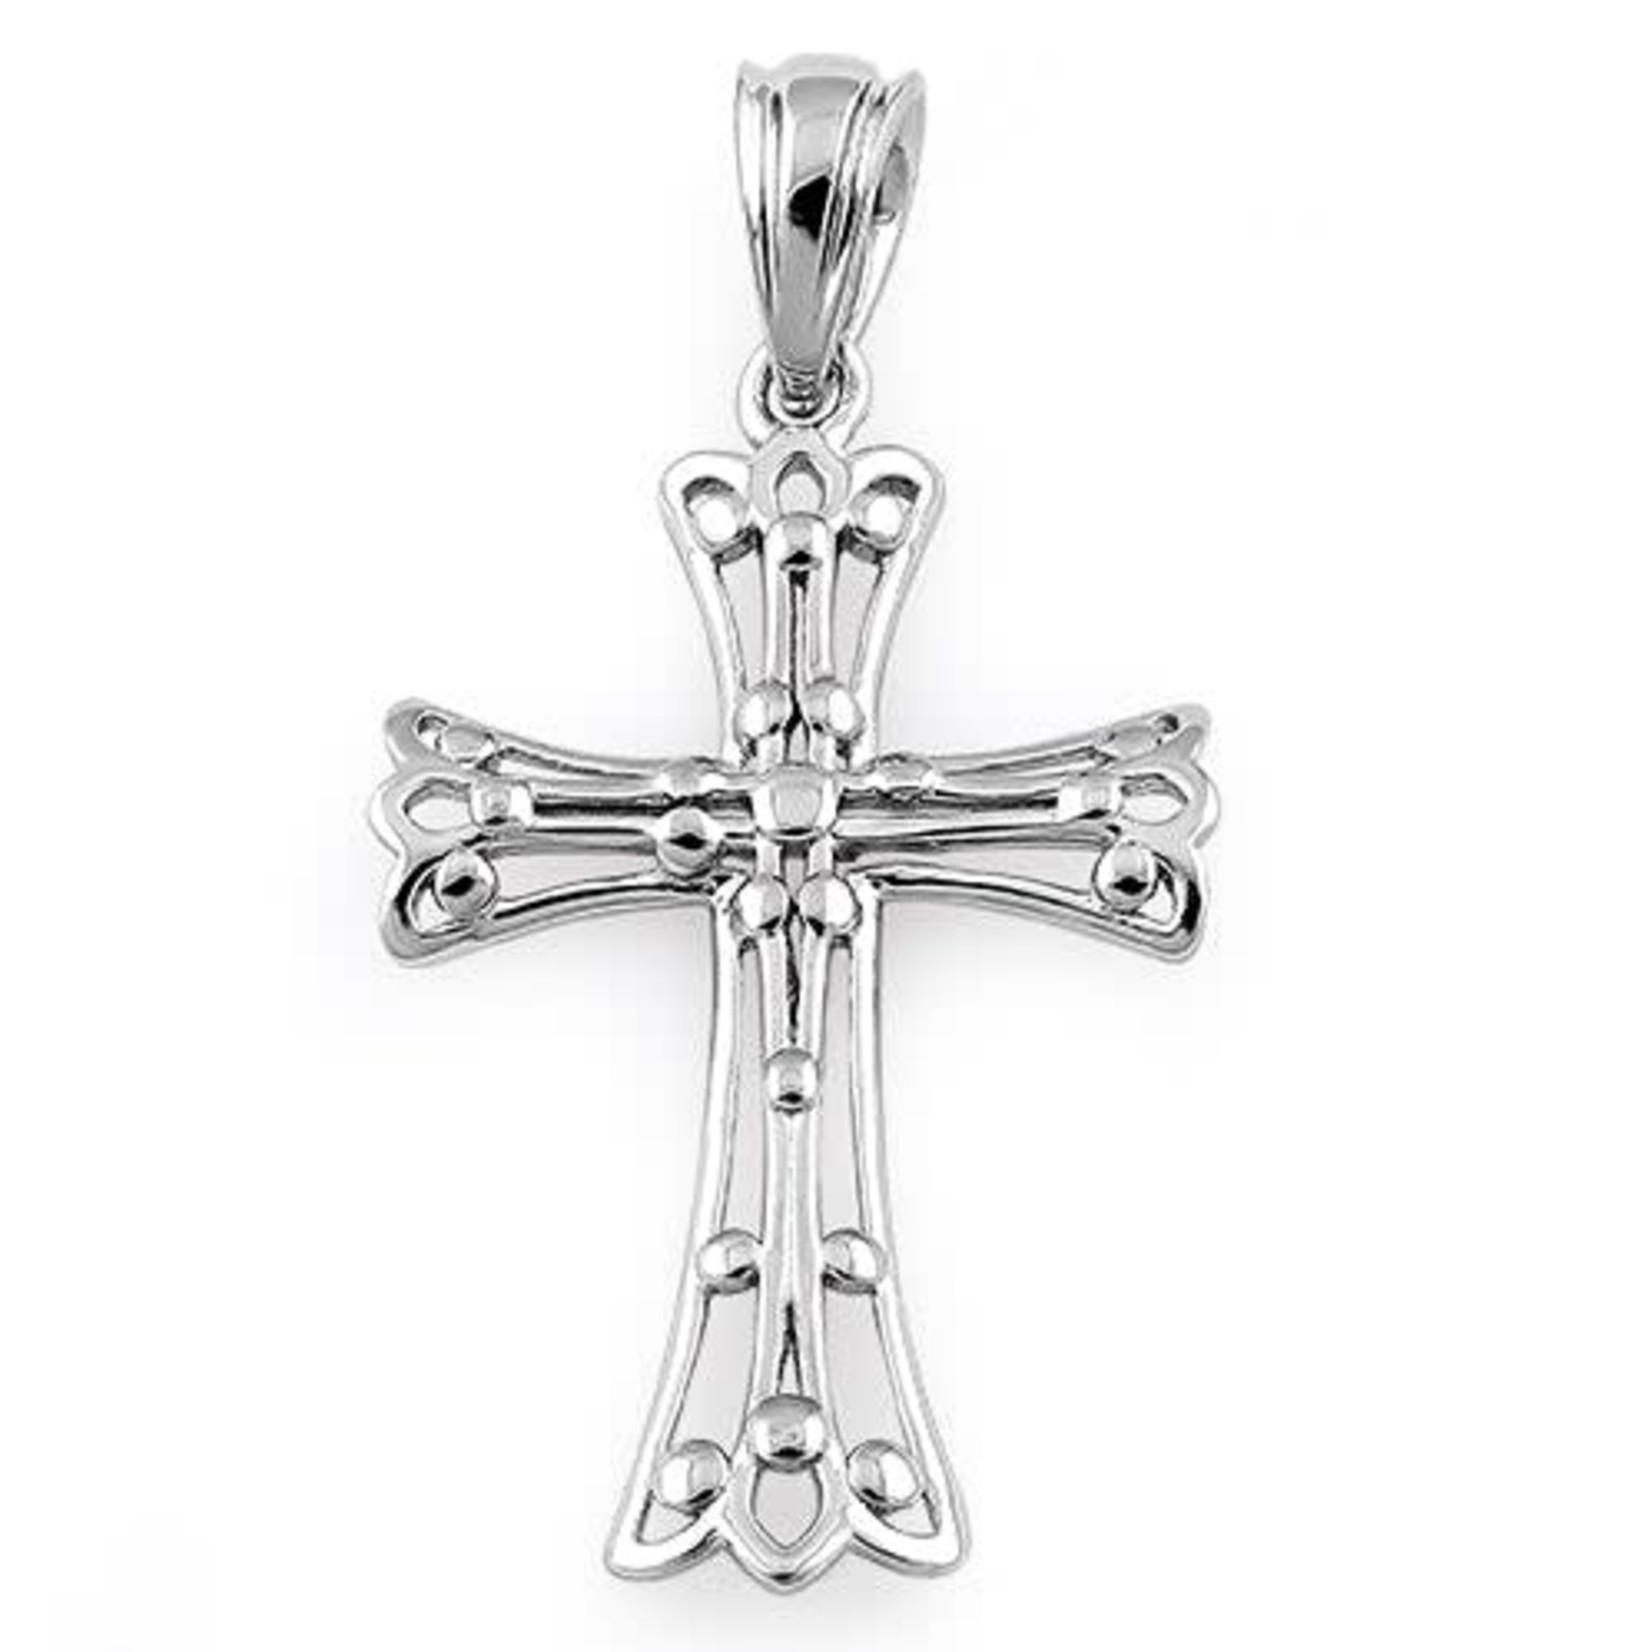 Silver Sterling Silver Ornate Cross Pendant